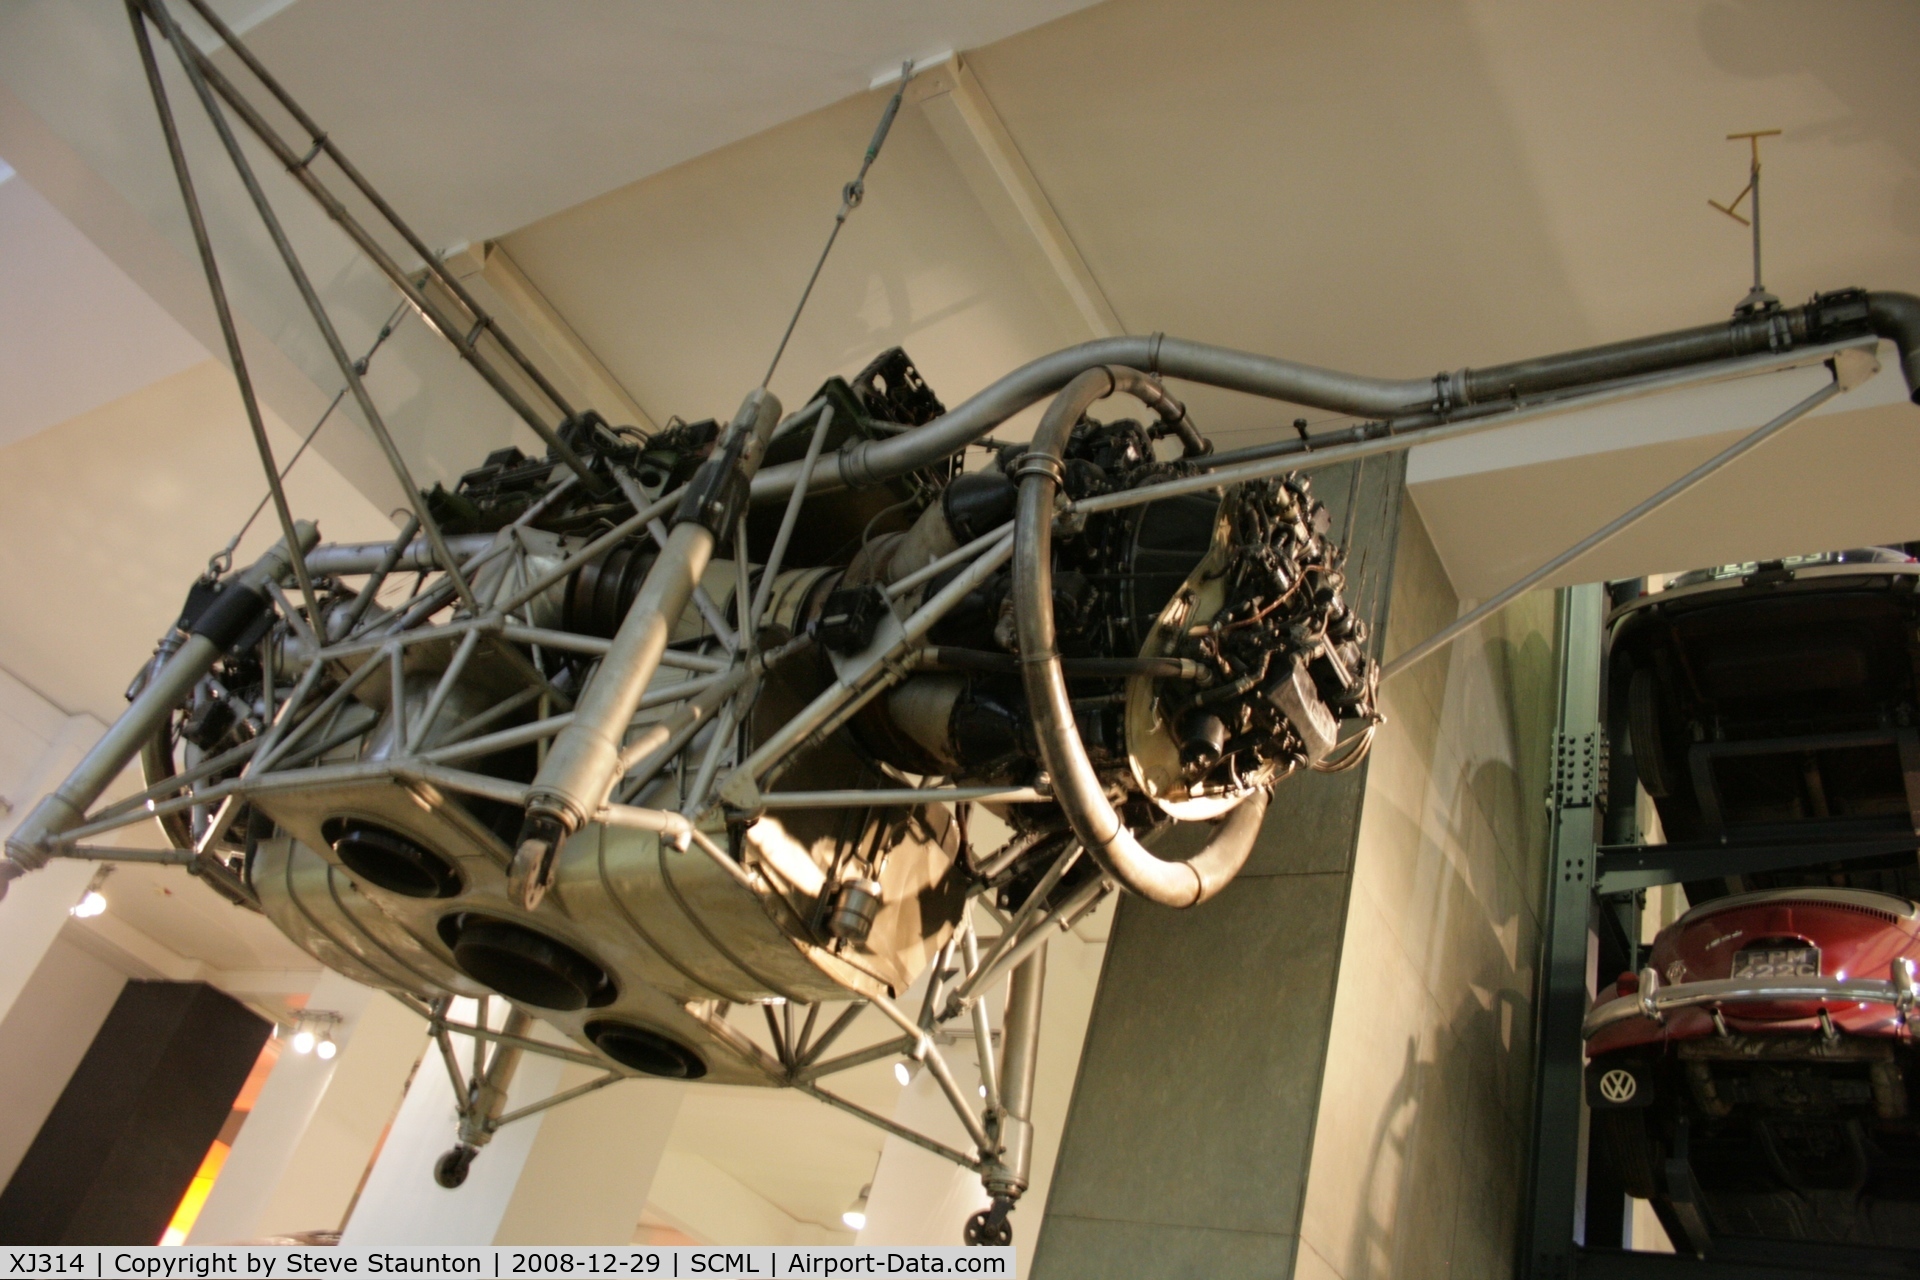 XJ314, Rolls-Royce Thrust Measuring Rig C/N 1, Taken at the Science Museum, London. December 2008